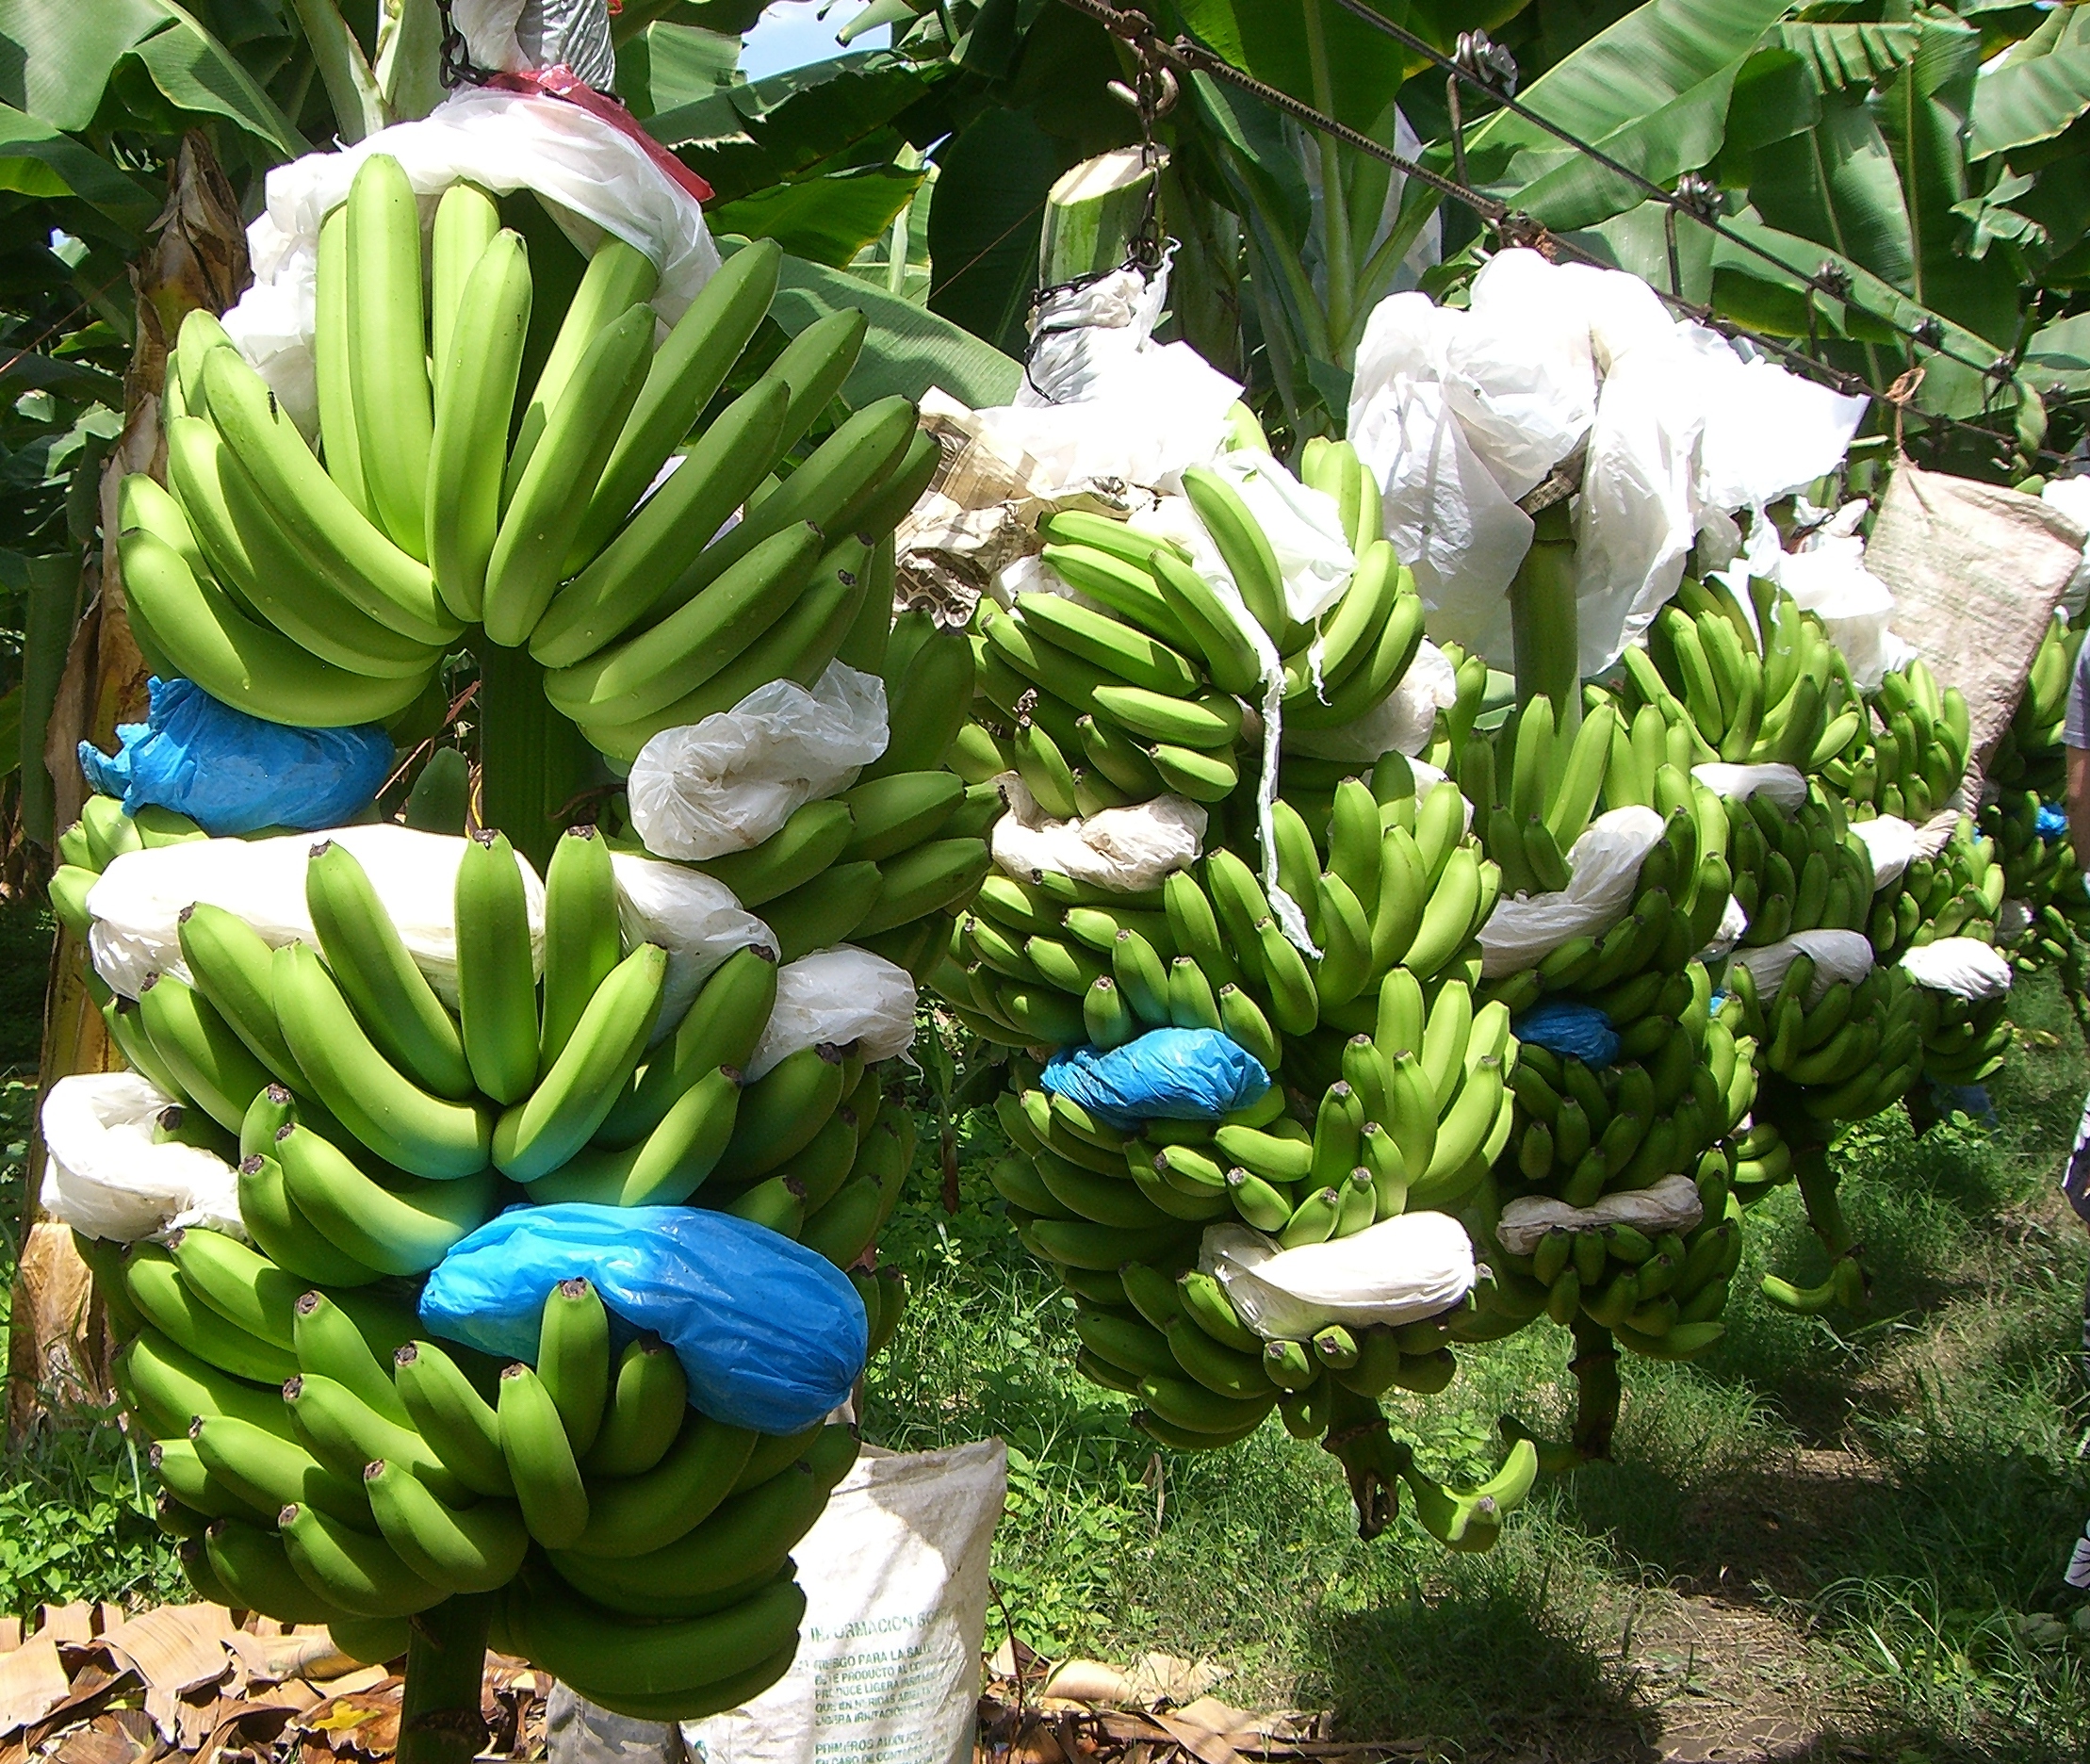 Harvested bananas